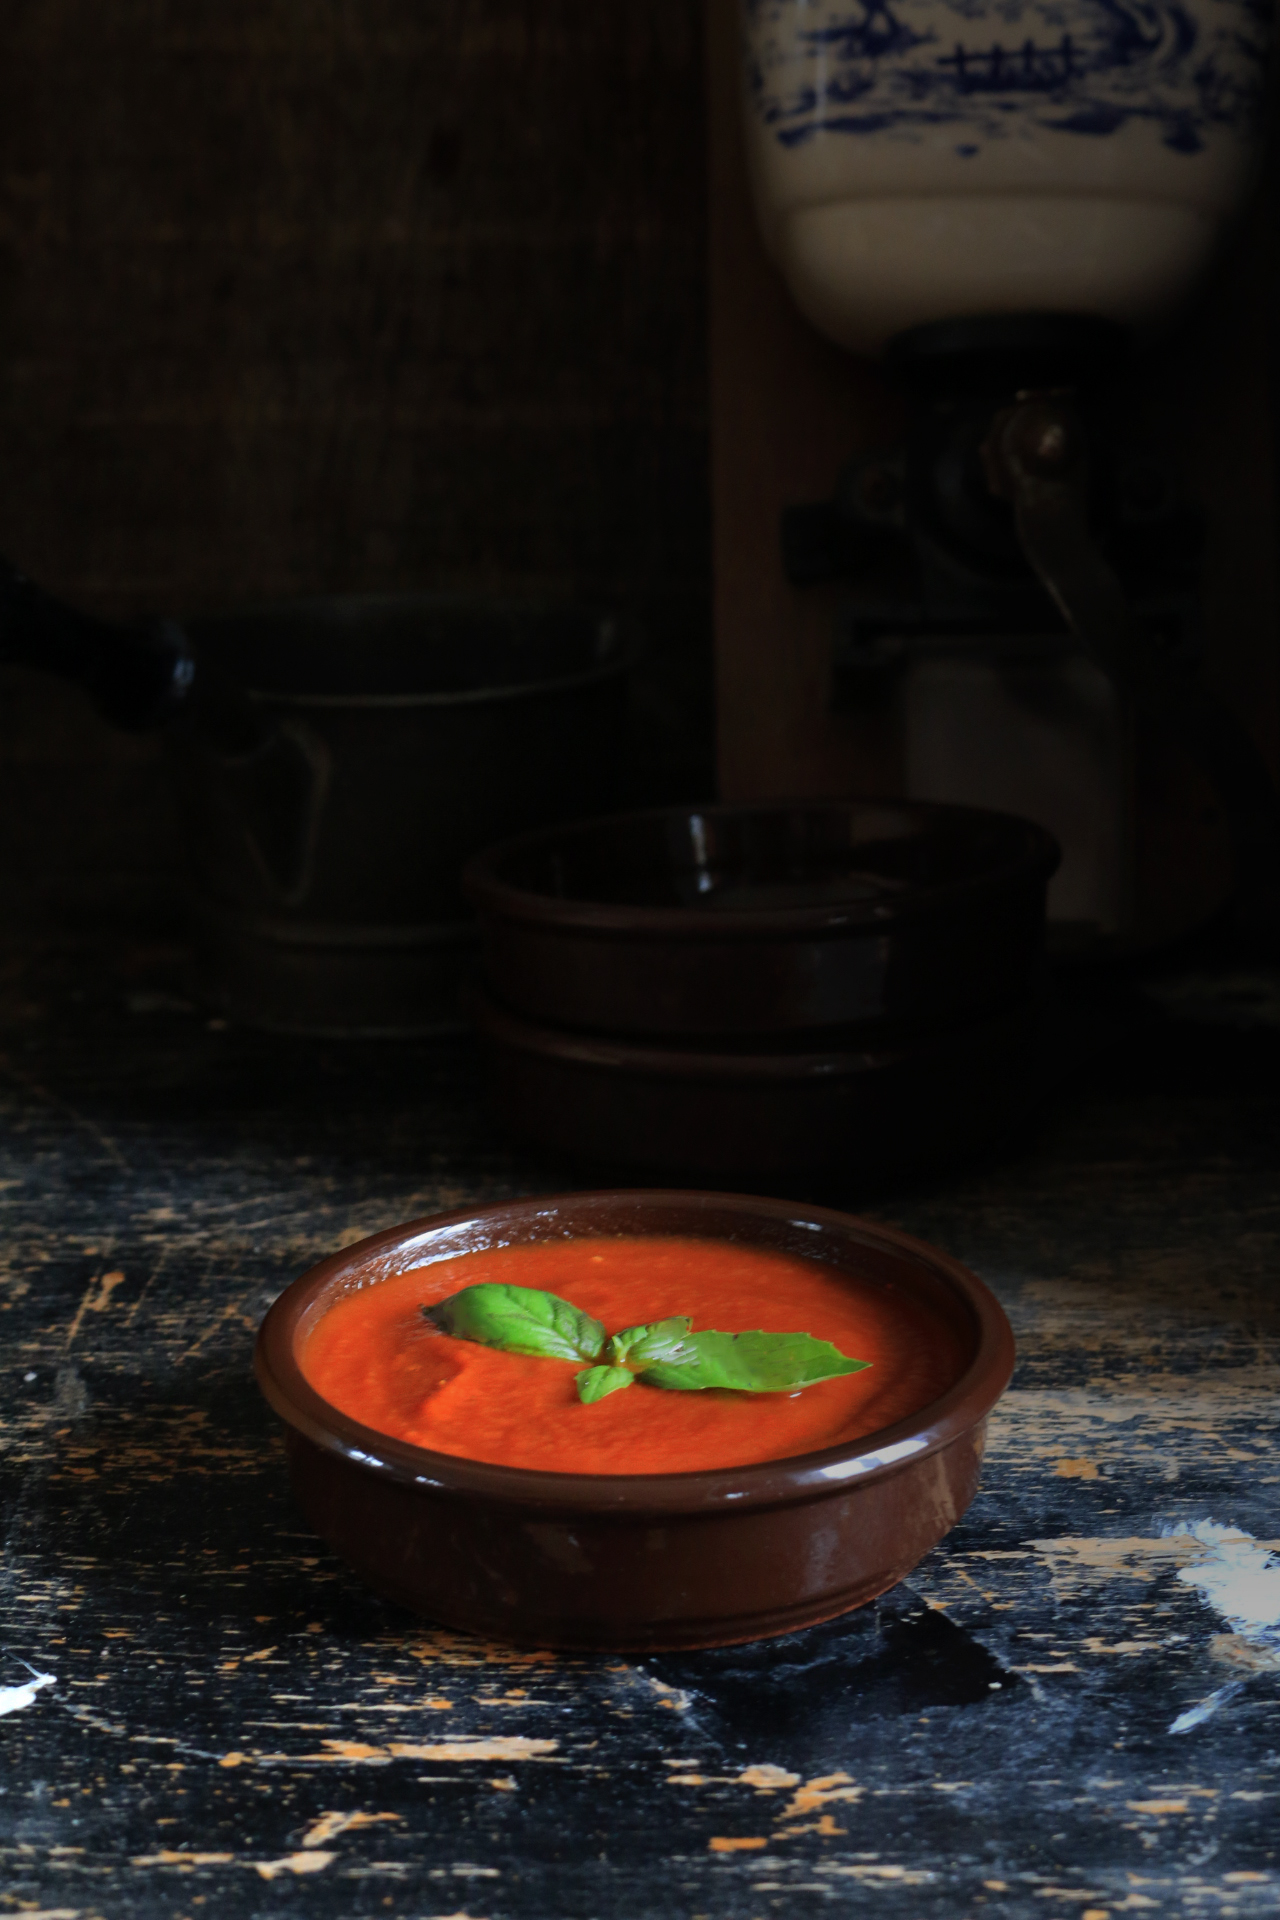 蔬菜在我的罐子裡-番茄泥COULIS DE TOMATE